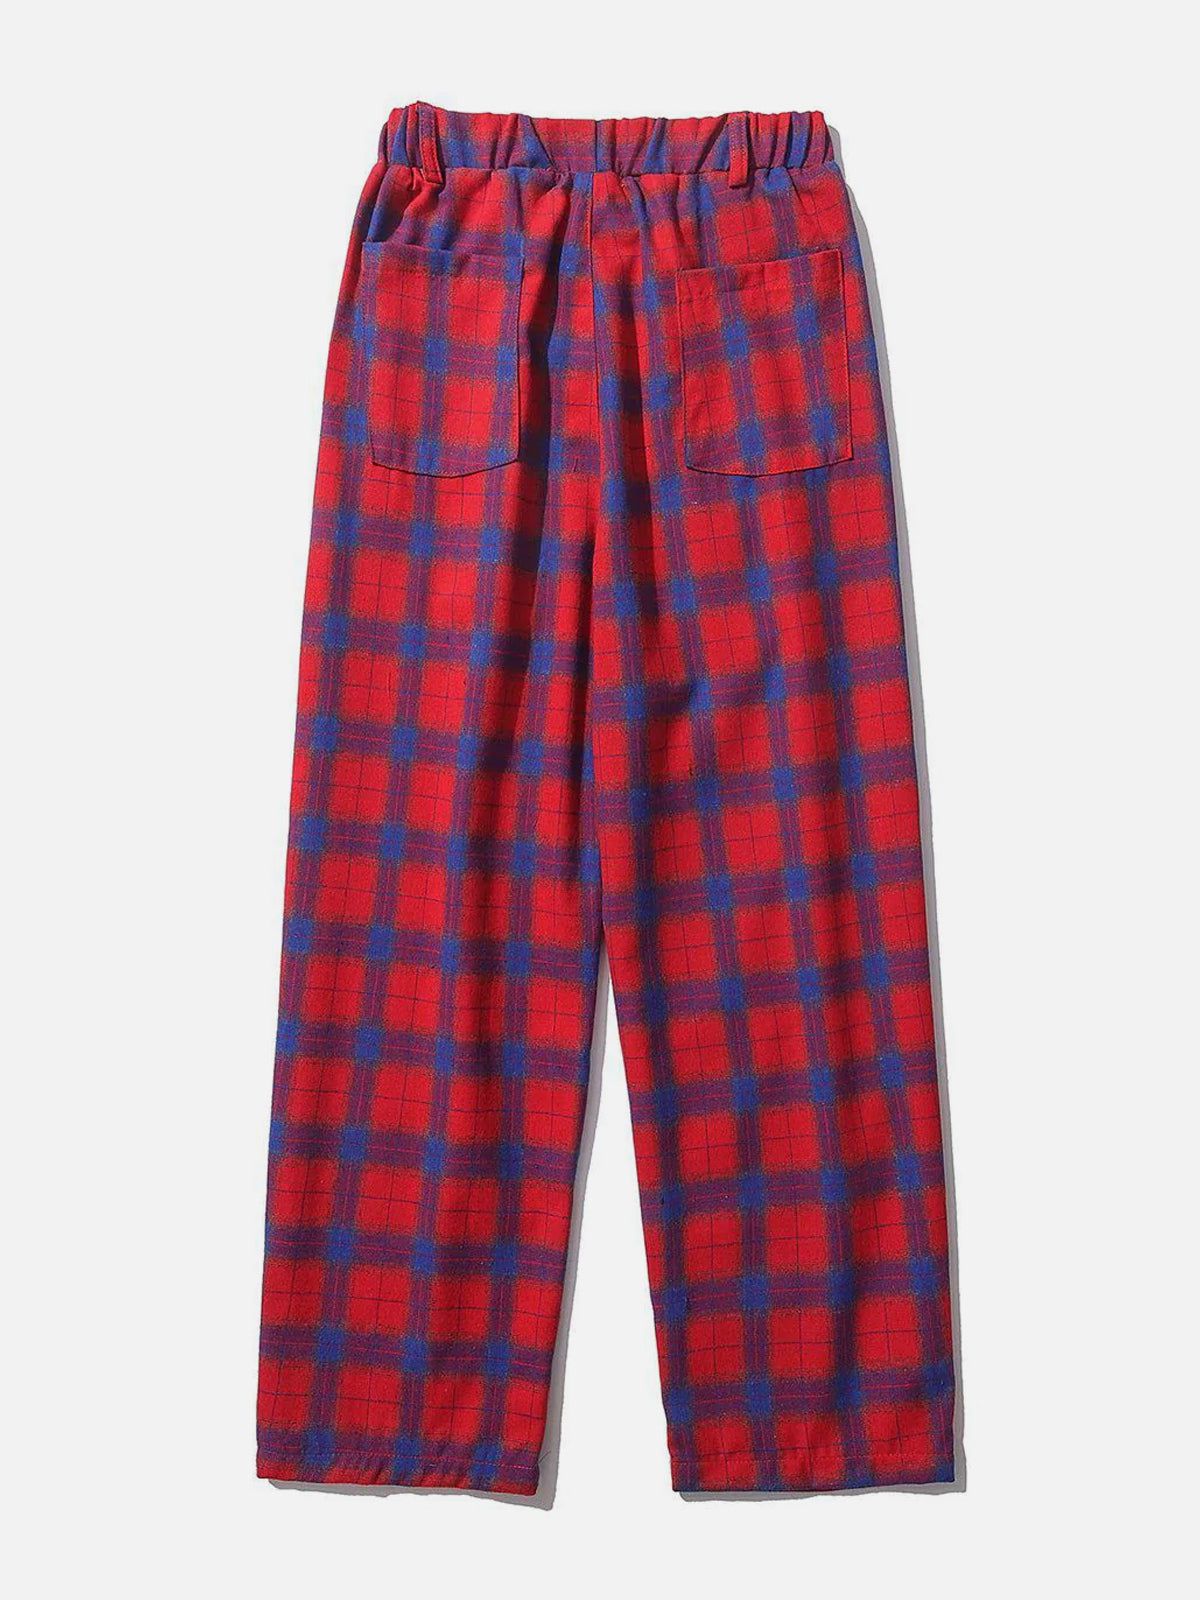 Eprezzy® - Red Plaid Pattern Casual Pants Streetwear Fashion - eprezzy.com